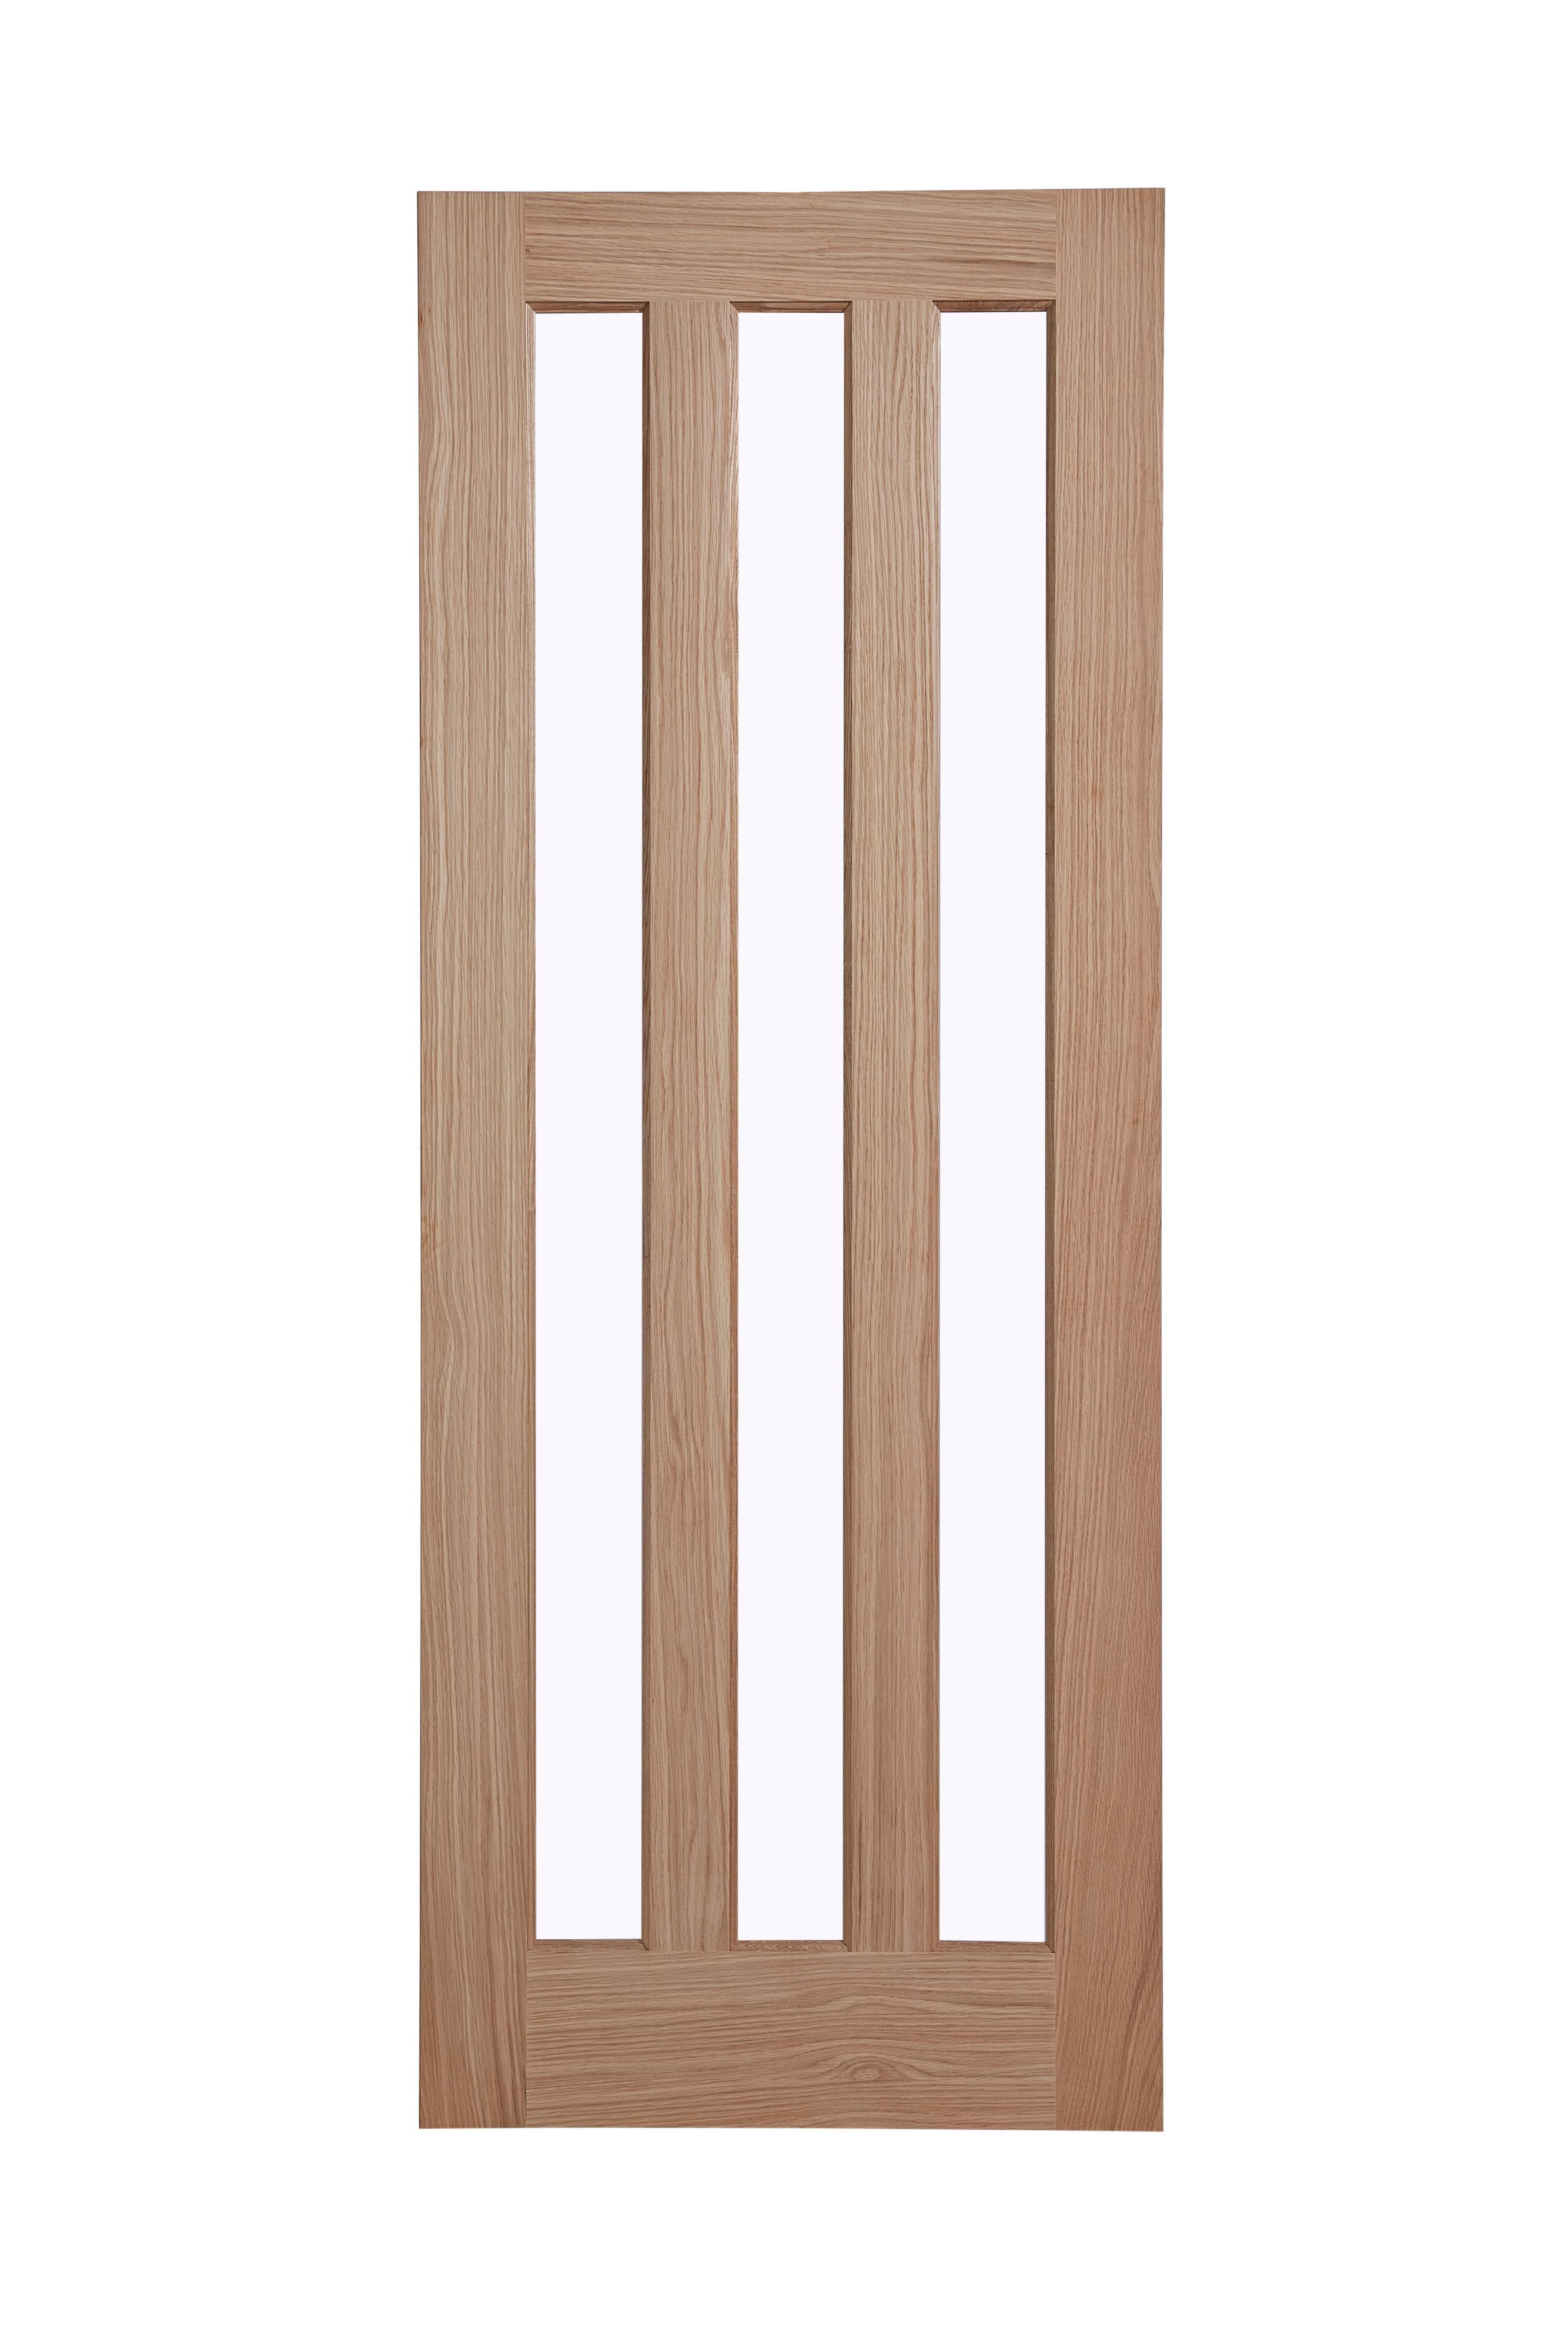 Vertical 3 panel Clear Glazed Contemporary White oak veneer Internal Door, (H)1981mm (W)762mm (T)35mm